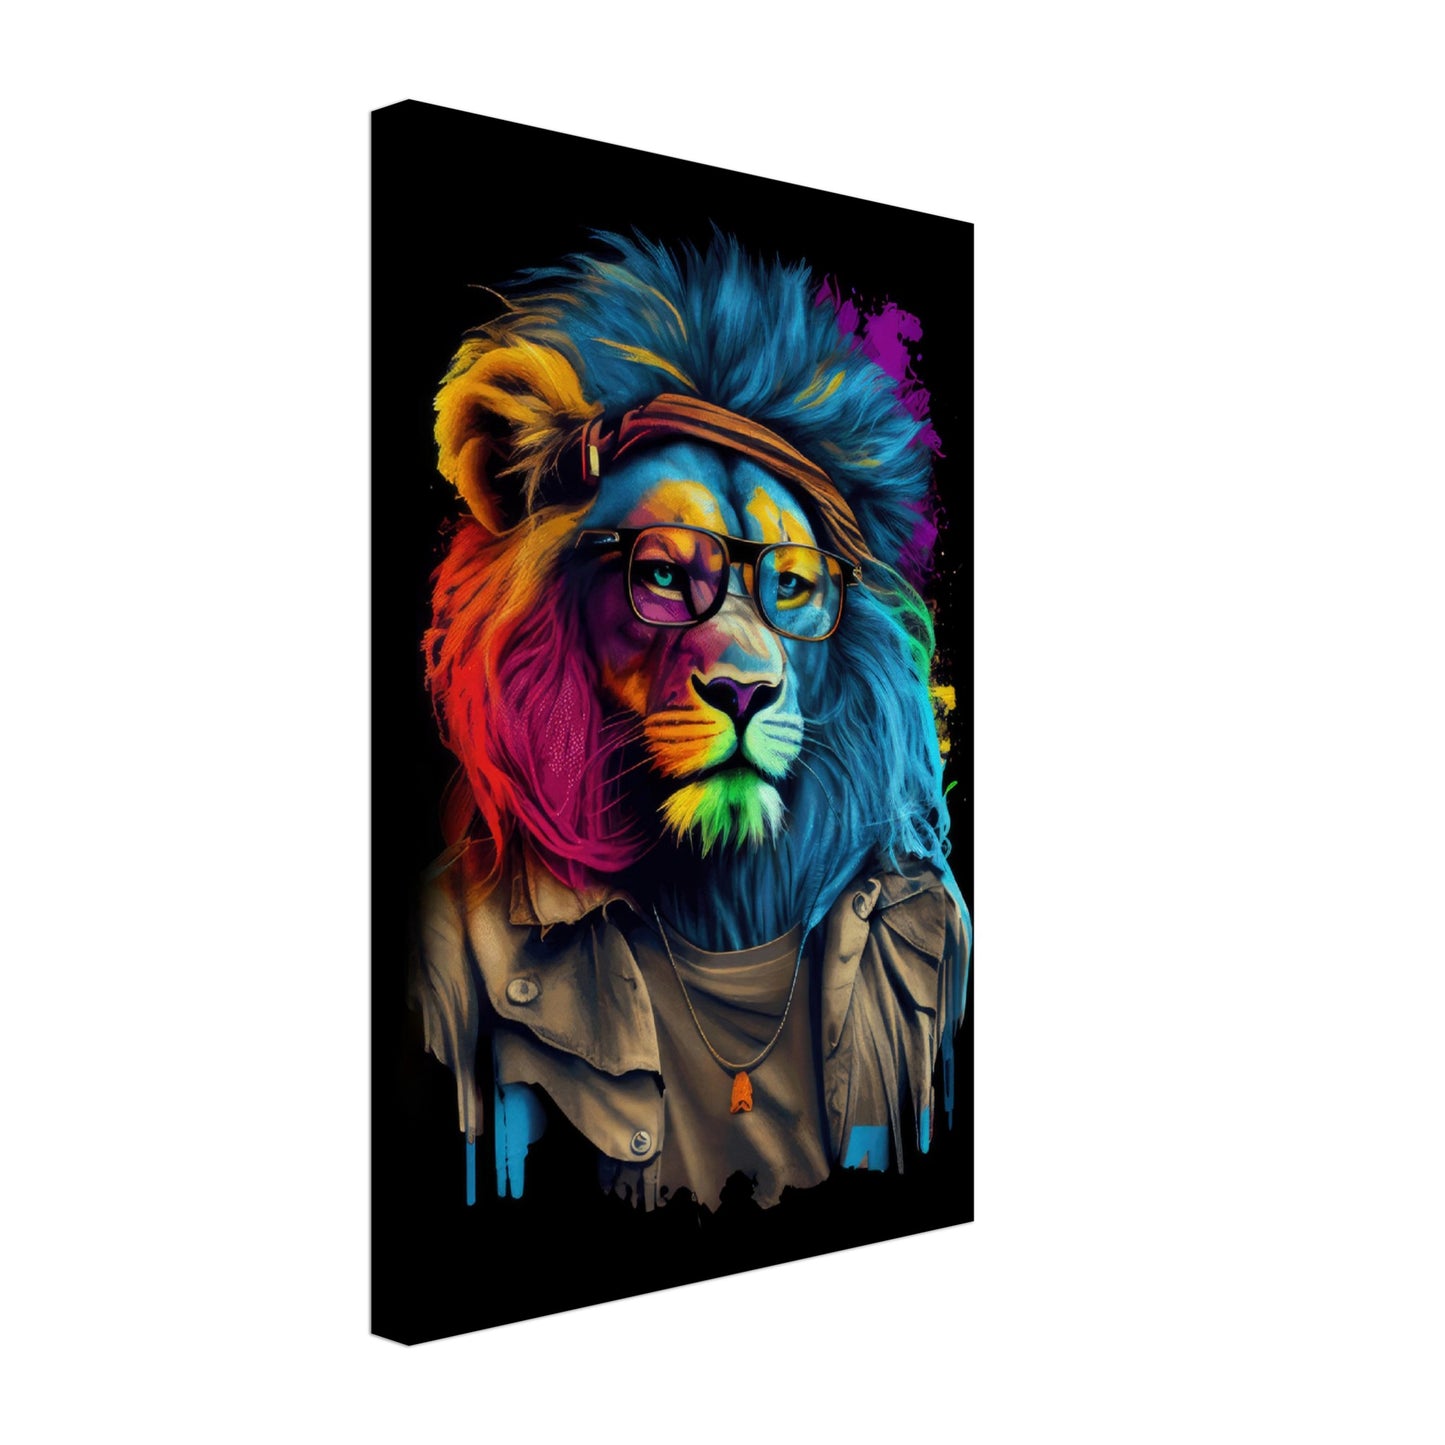 Fierce & Fabulous - Löwen Wandbild - Crazy Wildlife Leinwand ColorWorld im Hochformat - Coole Tiere & Animals Kunstdruck